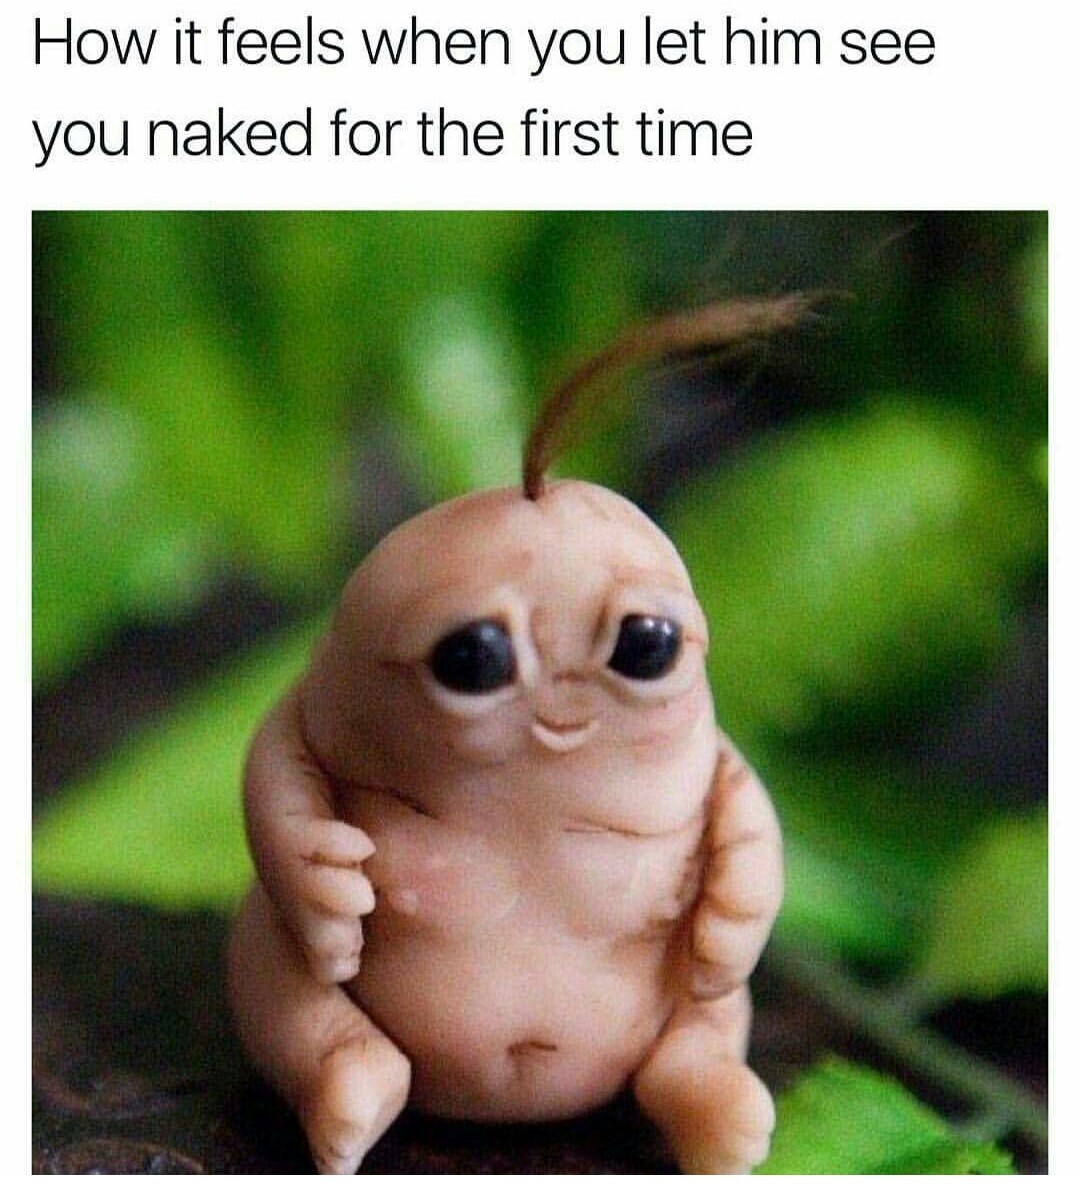 Me me me naked